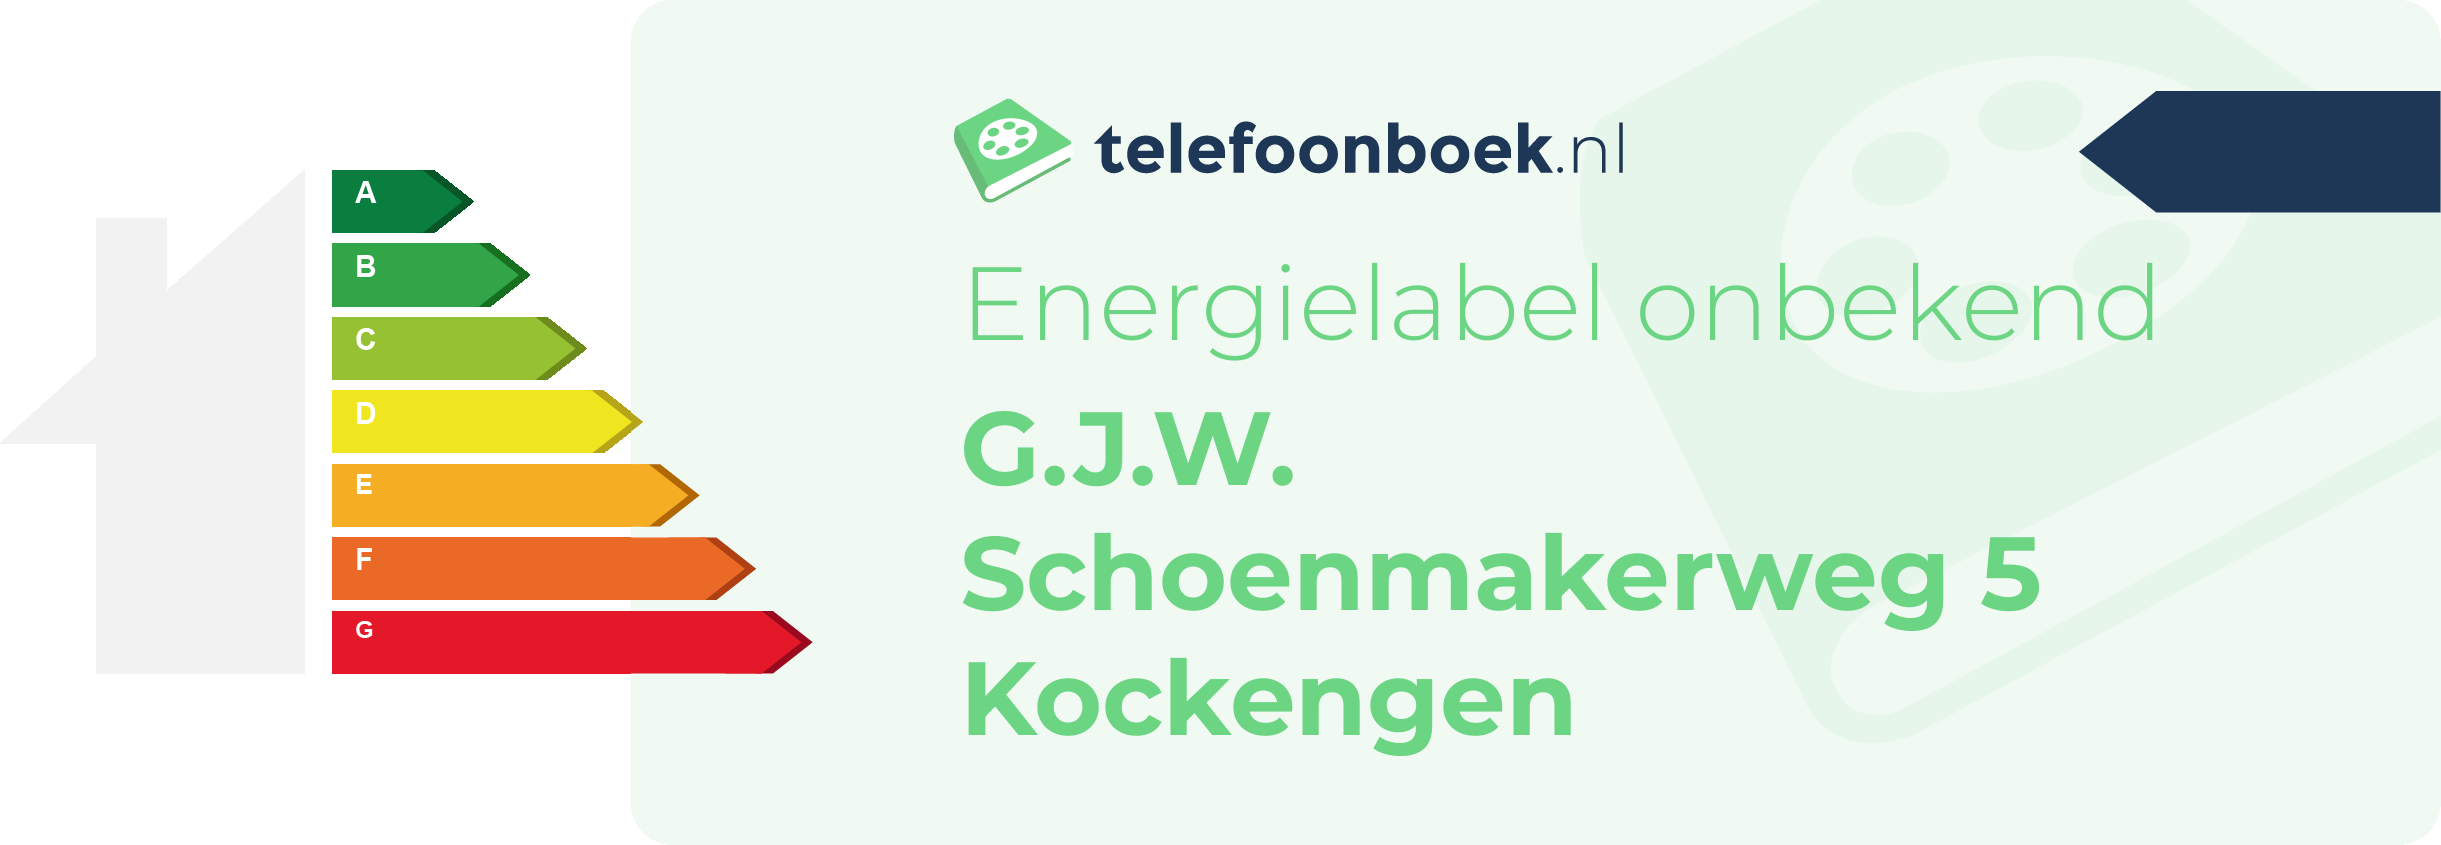 Energielabel G.J.W. Schoenmakerweg 5 Kockengen